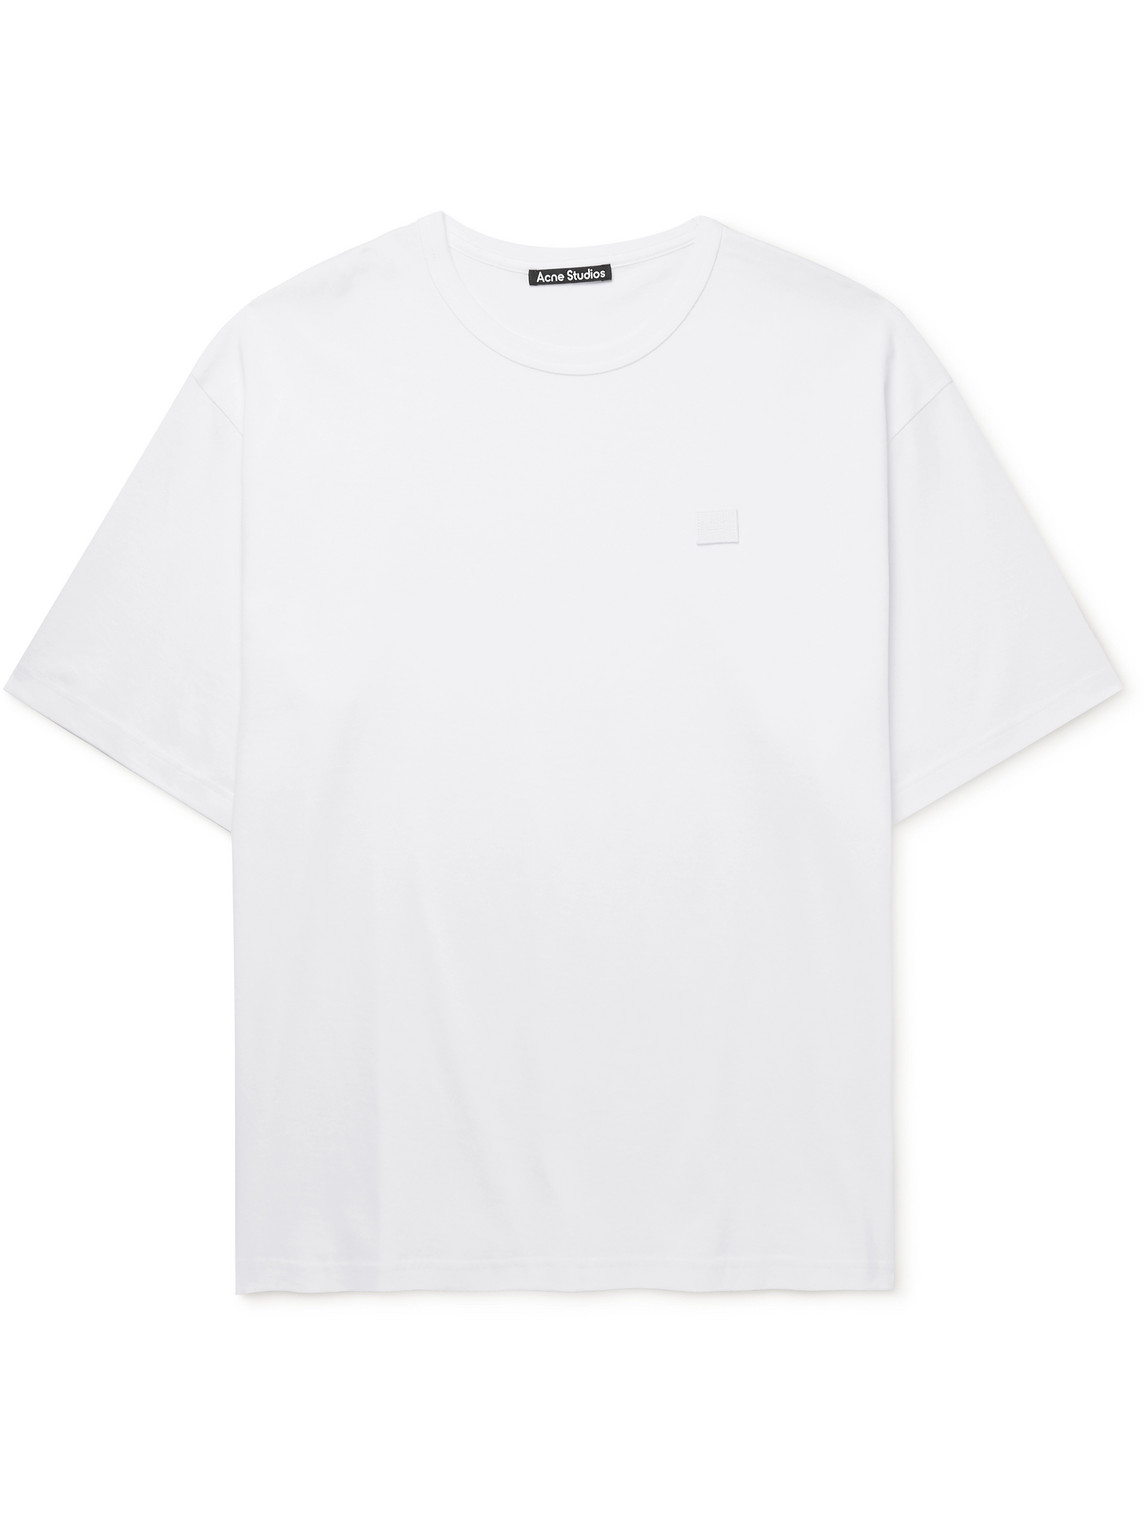 Acne Studios Exford Oversized Logo-Appliquéd Cotton-Jersey T-Shirt